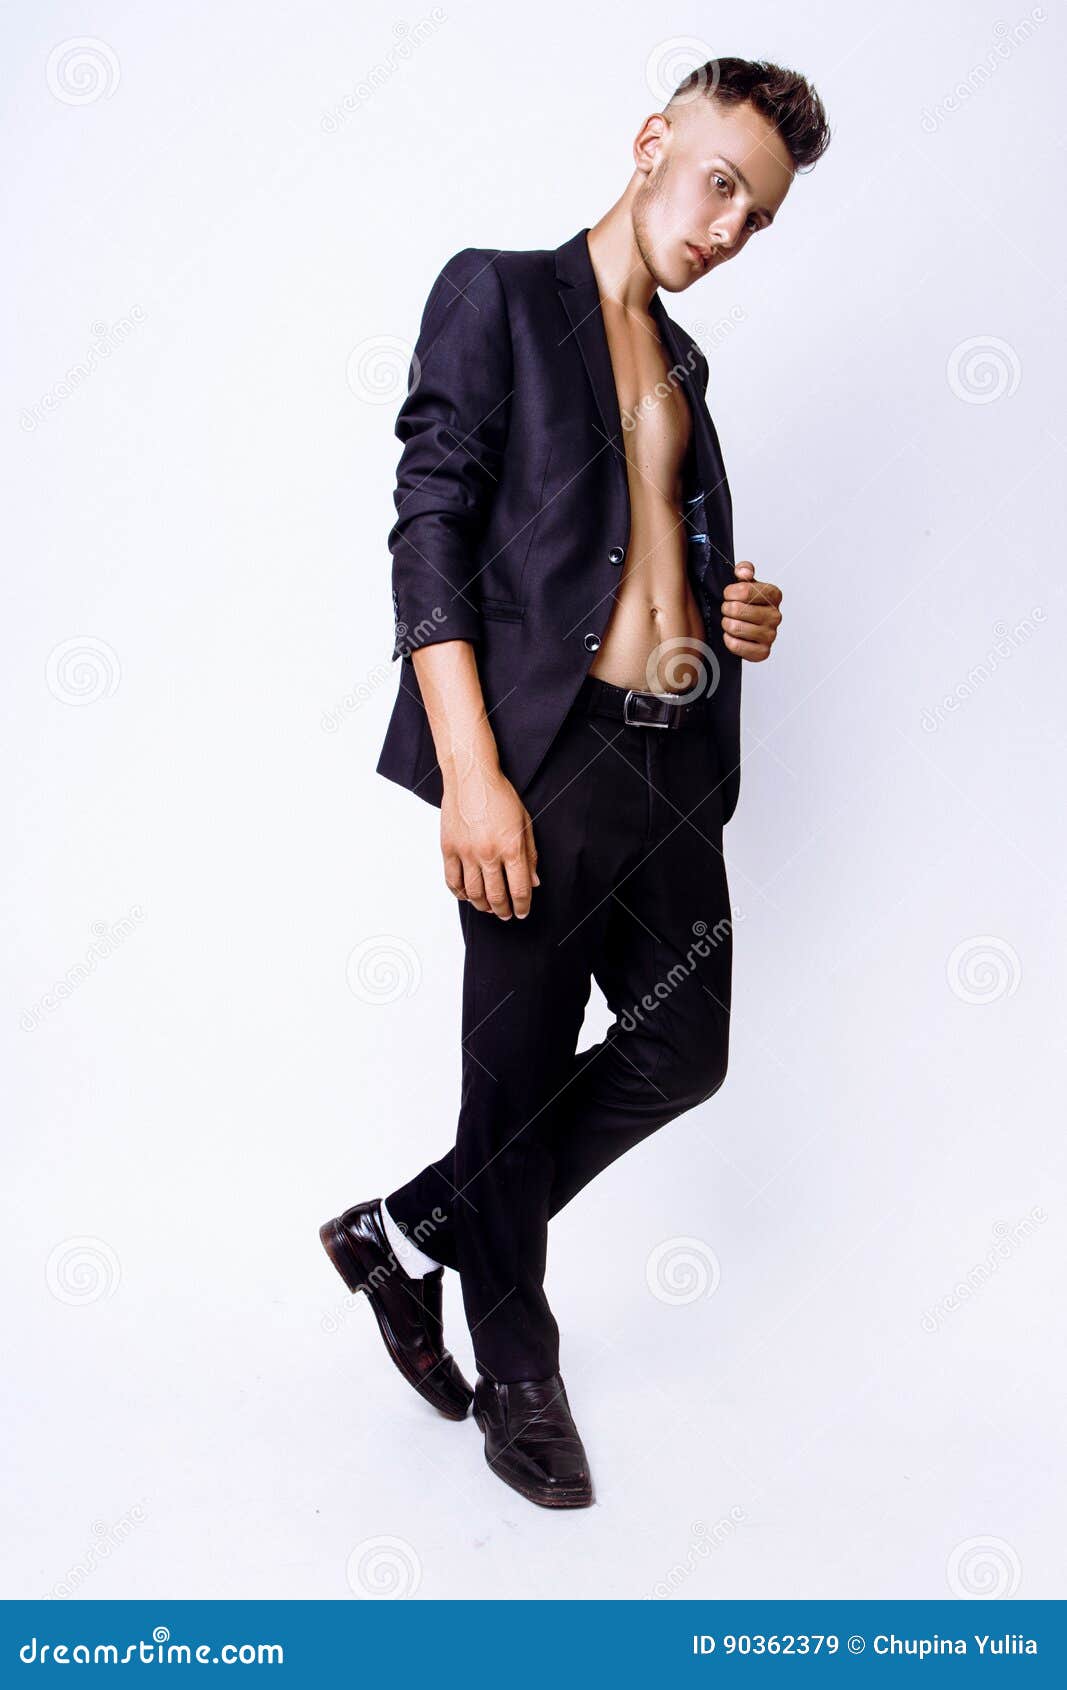 Jarryd- full length male model pose reference 1 by faestock on DeviantArt